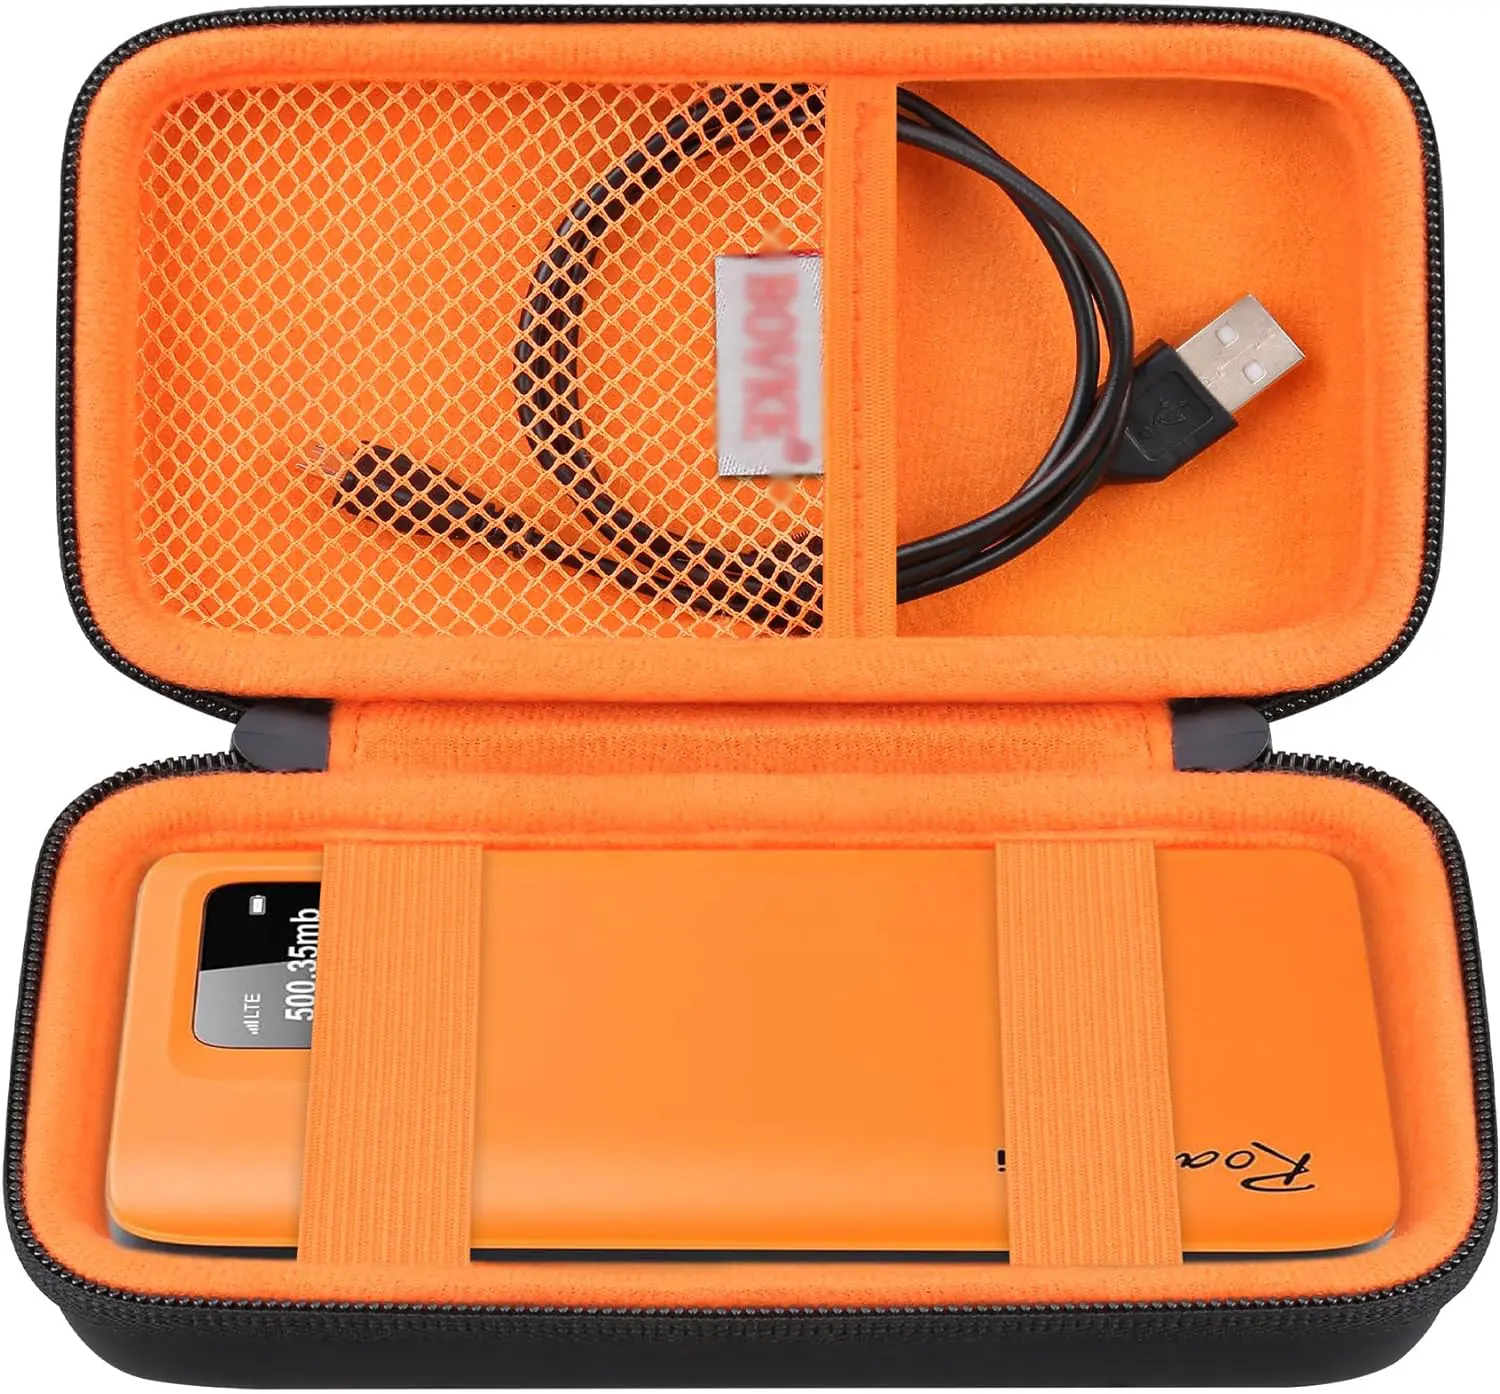 Custom EVA Travel Case For RoamWiFi 4G LTE Mobile Hotspot Router Worldwide Portable High Speed Hotspot Business Carrying Pouch